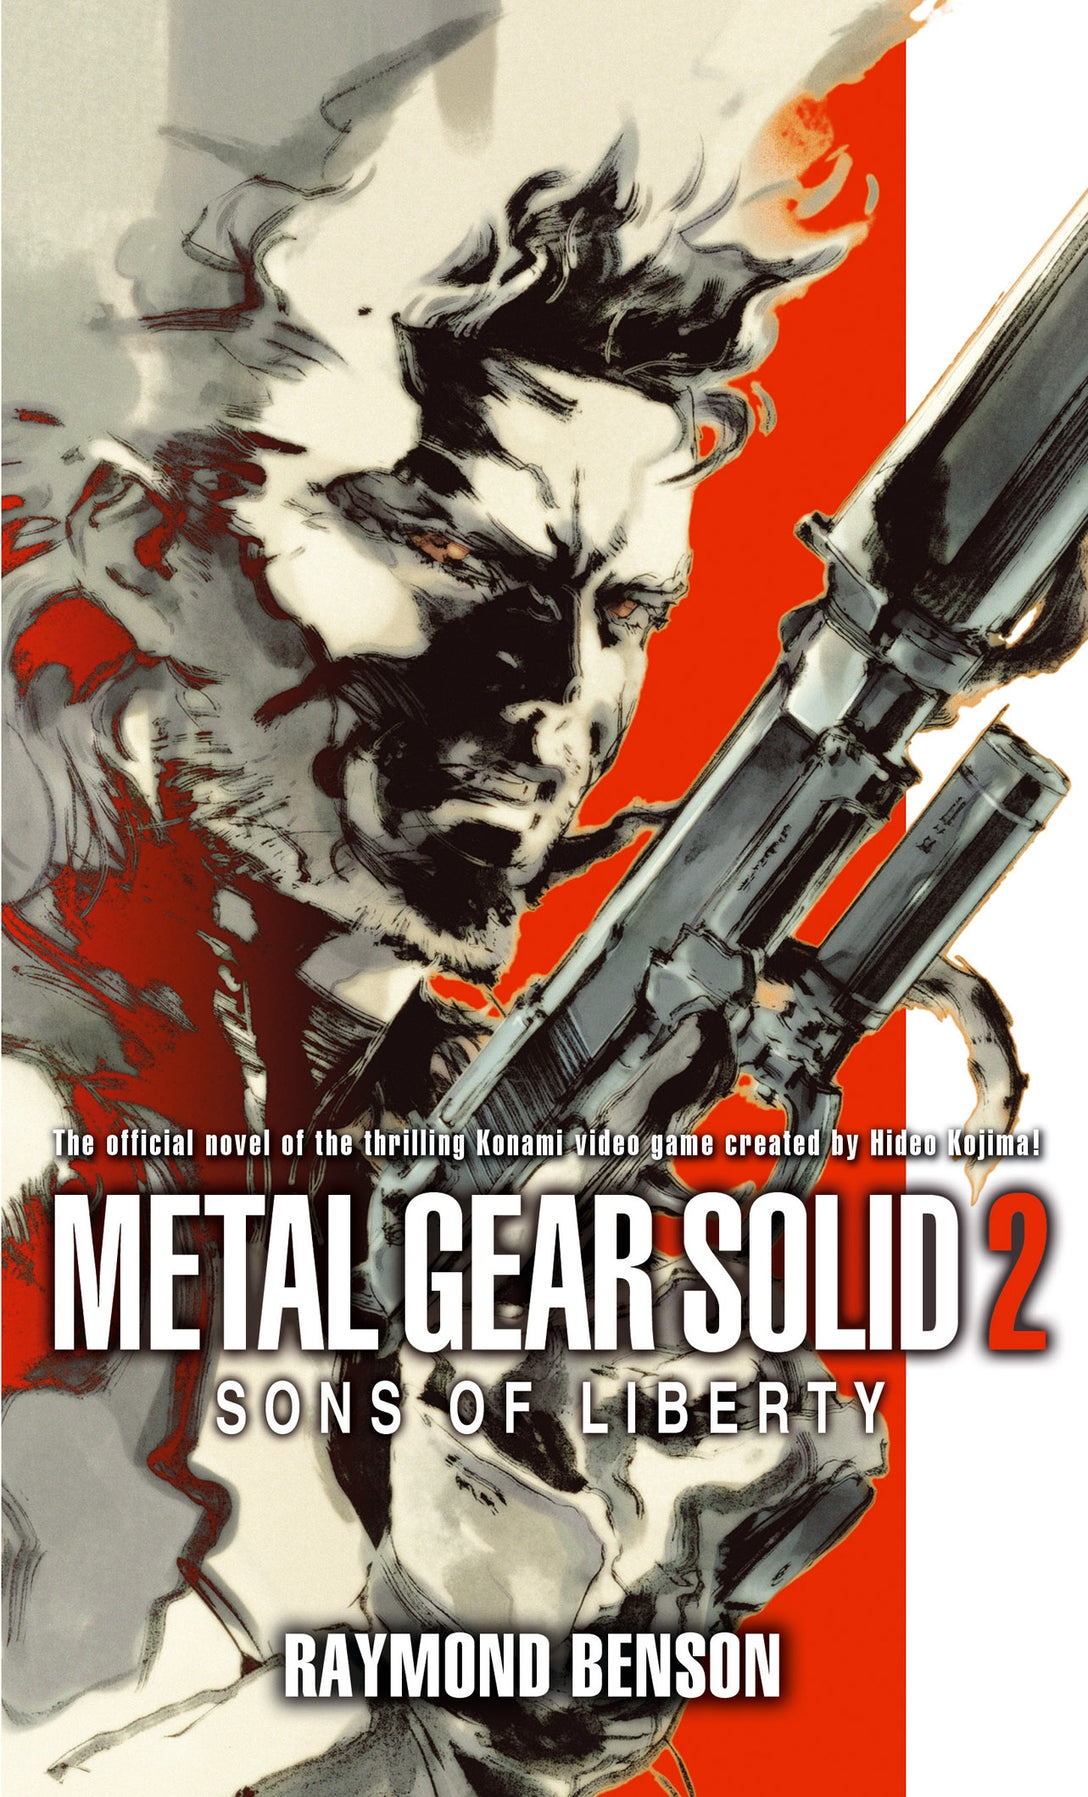 Metal Gear Solid: Book 2 by Raymond Benson